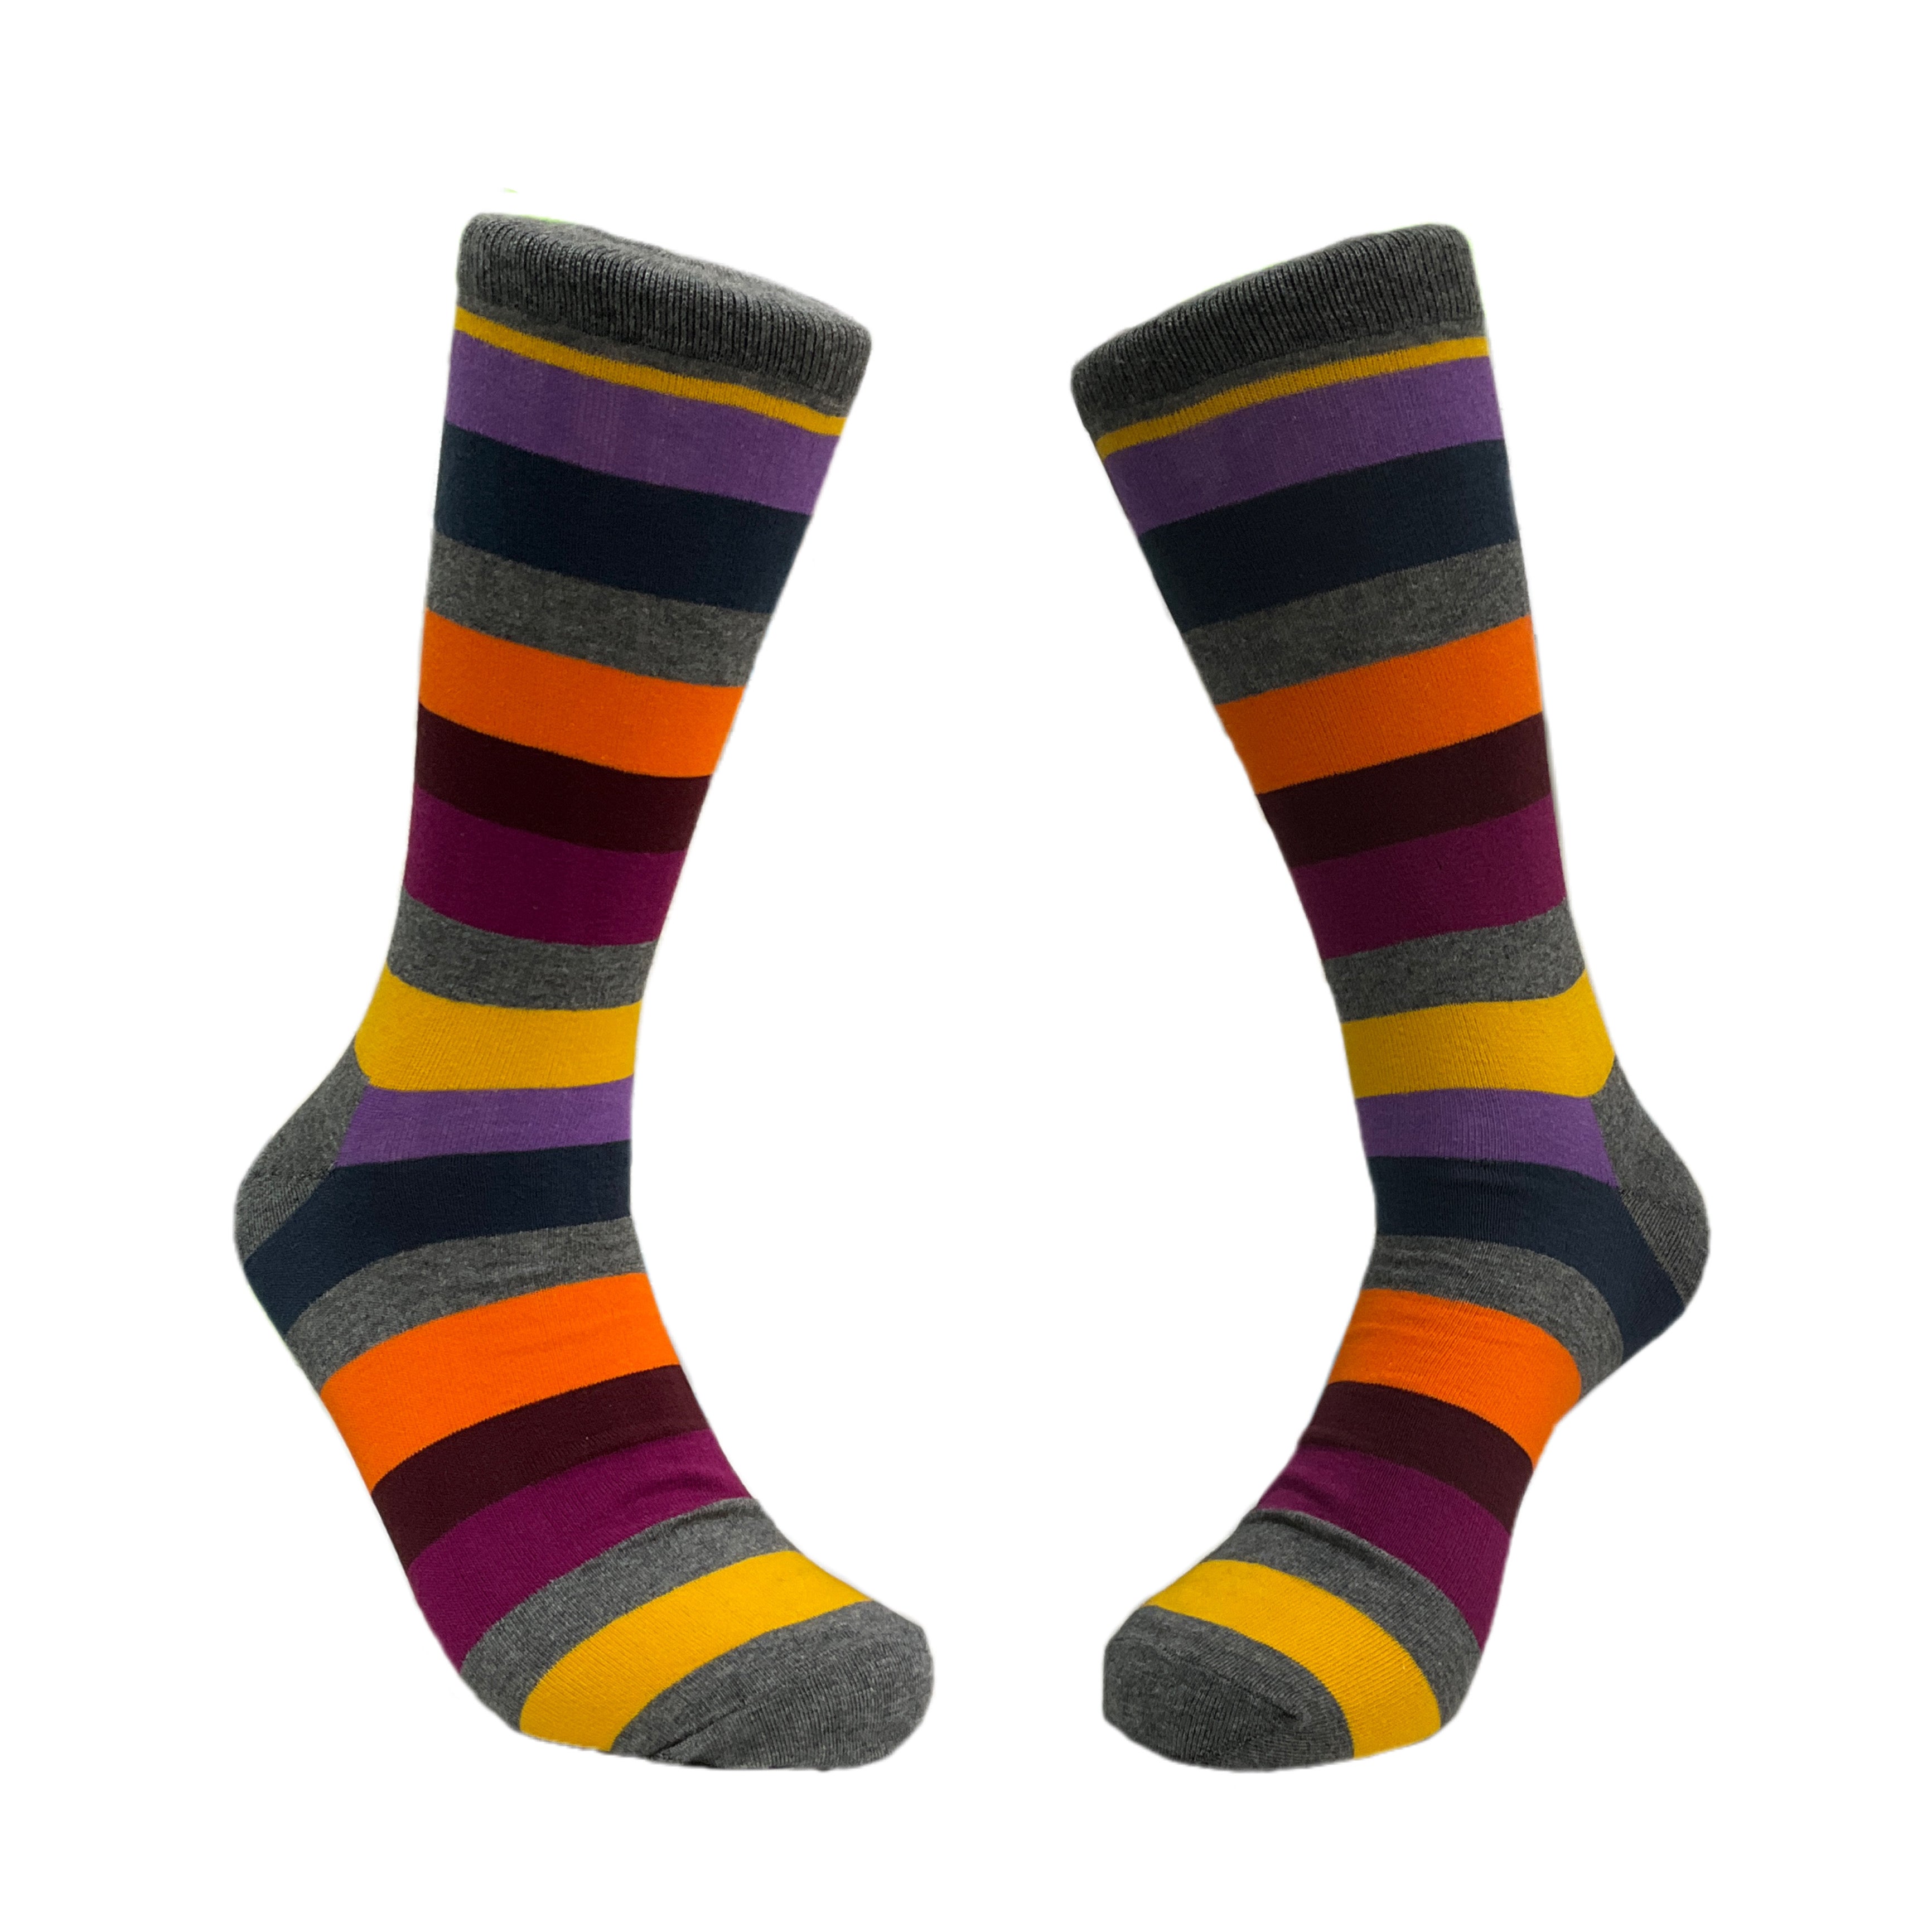 Colorful Striped Socks (Adult Large)